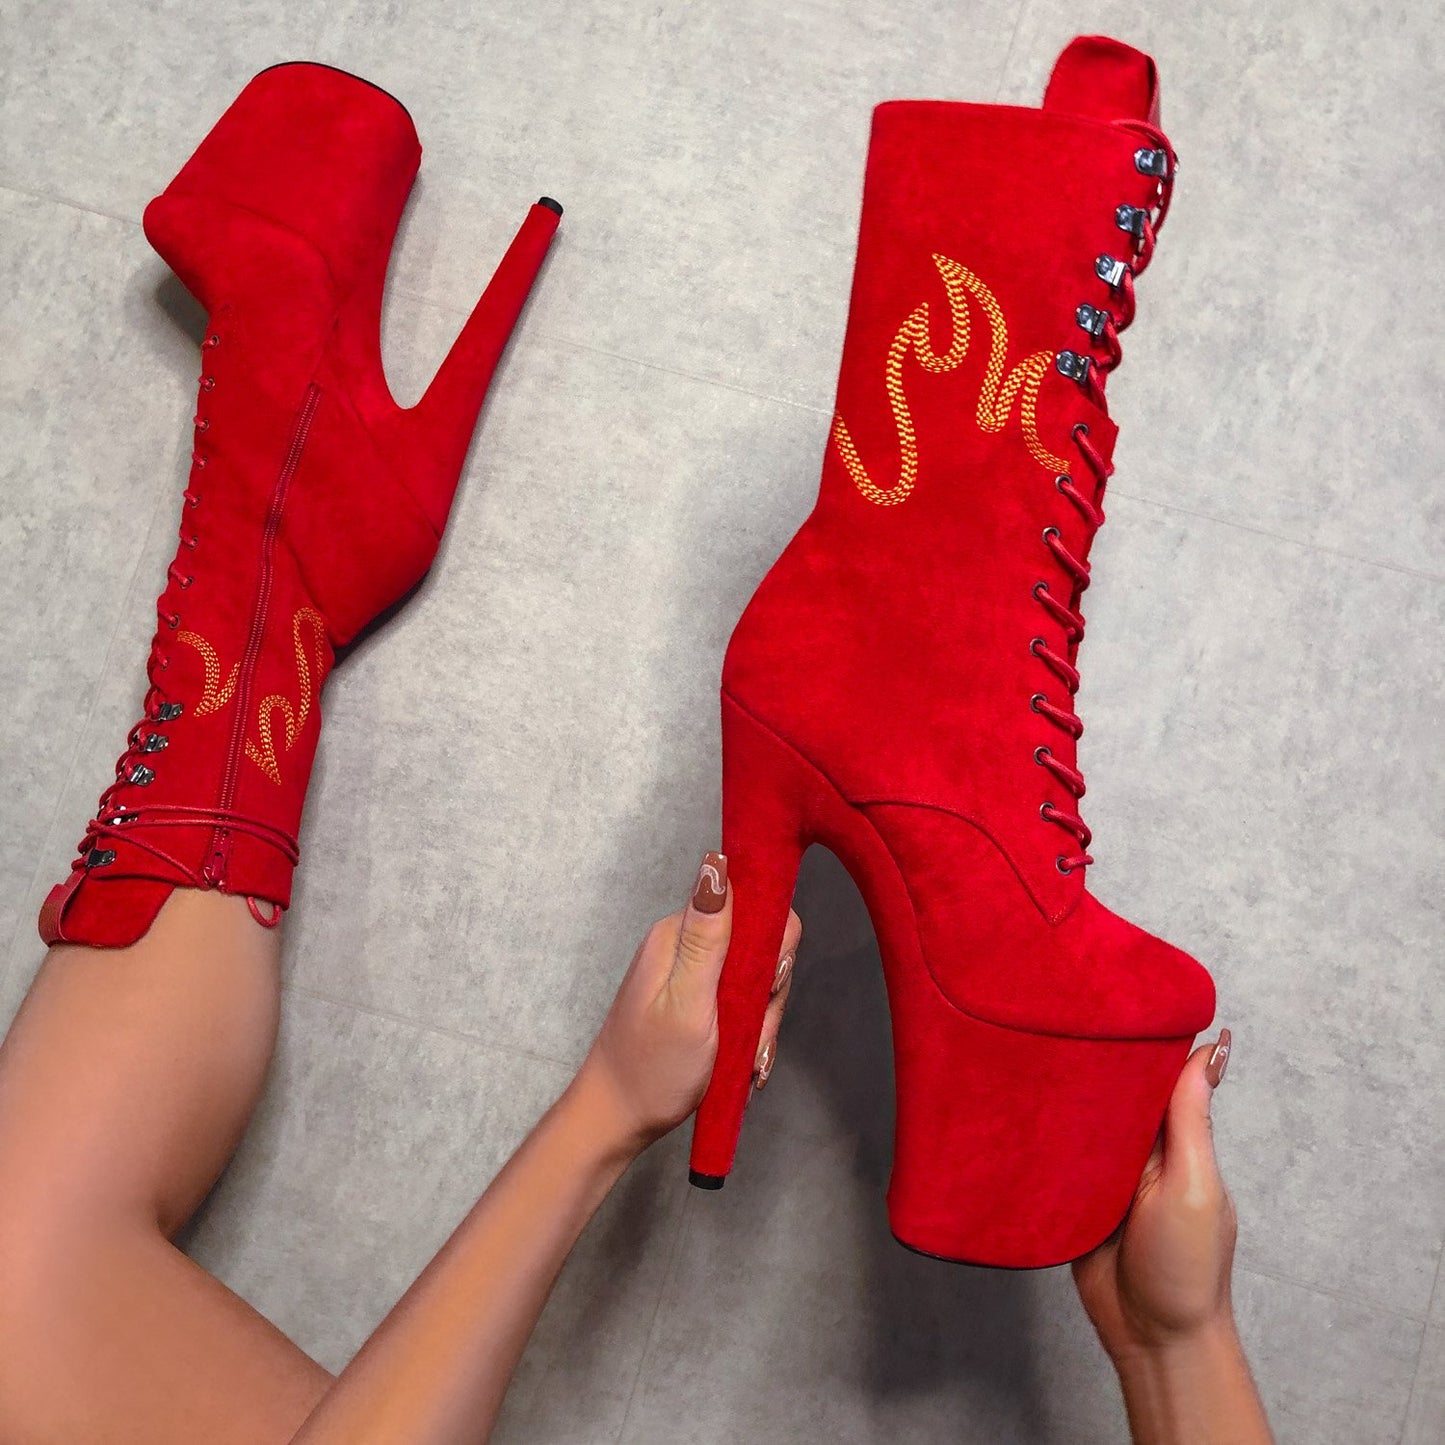 HellGirl Red/Yellow Front Lace - 8 INCH, stripper shoe, stripper heel, pole heel, not a pleaser, platform, dancer, pole dance, floor work